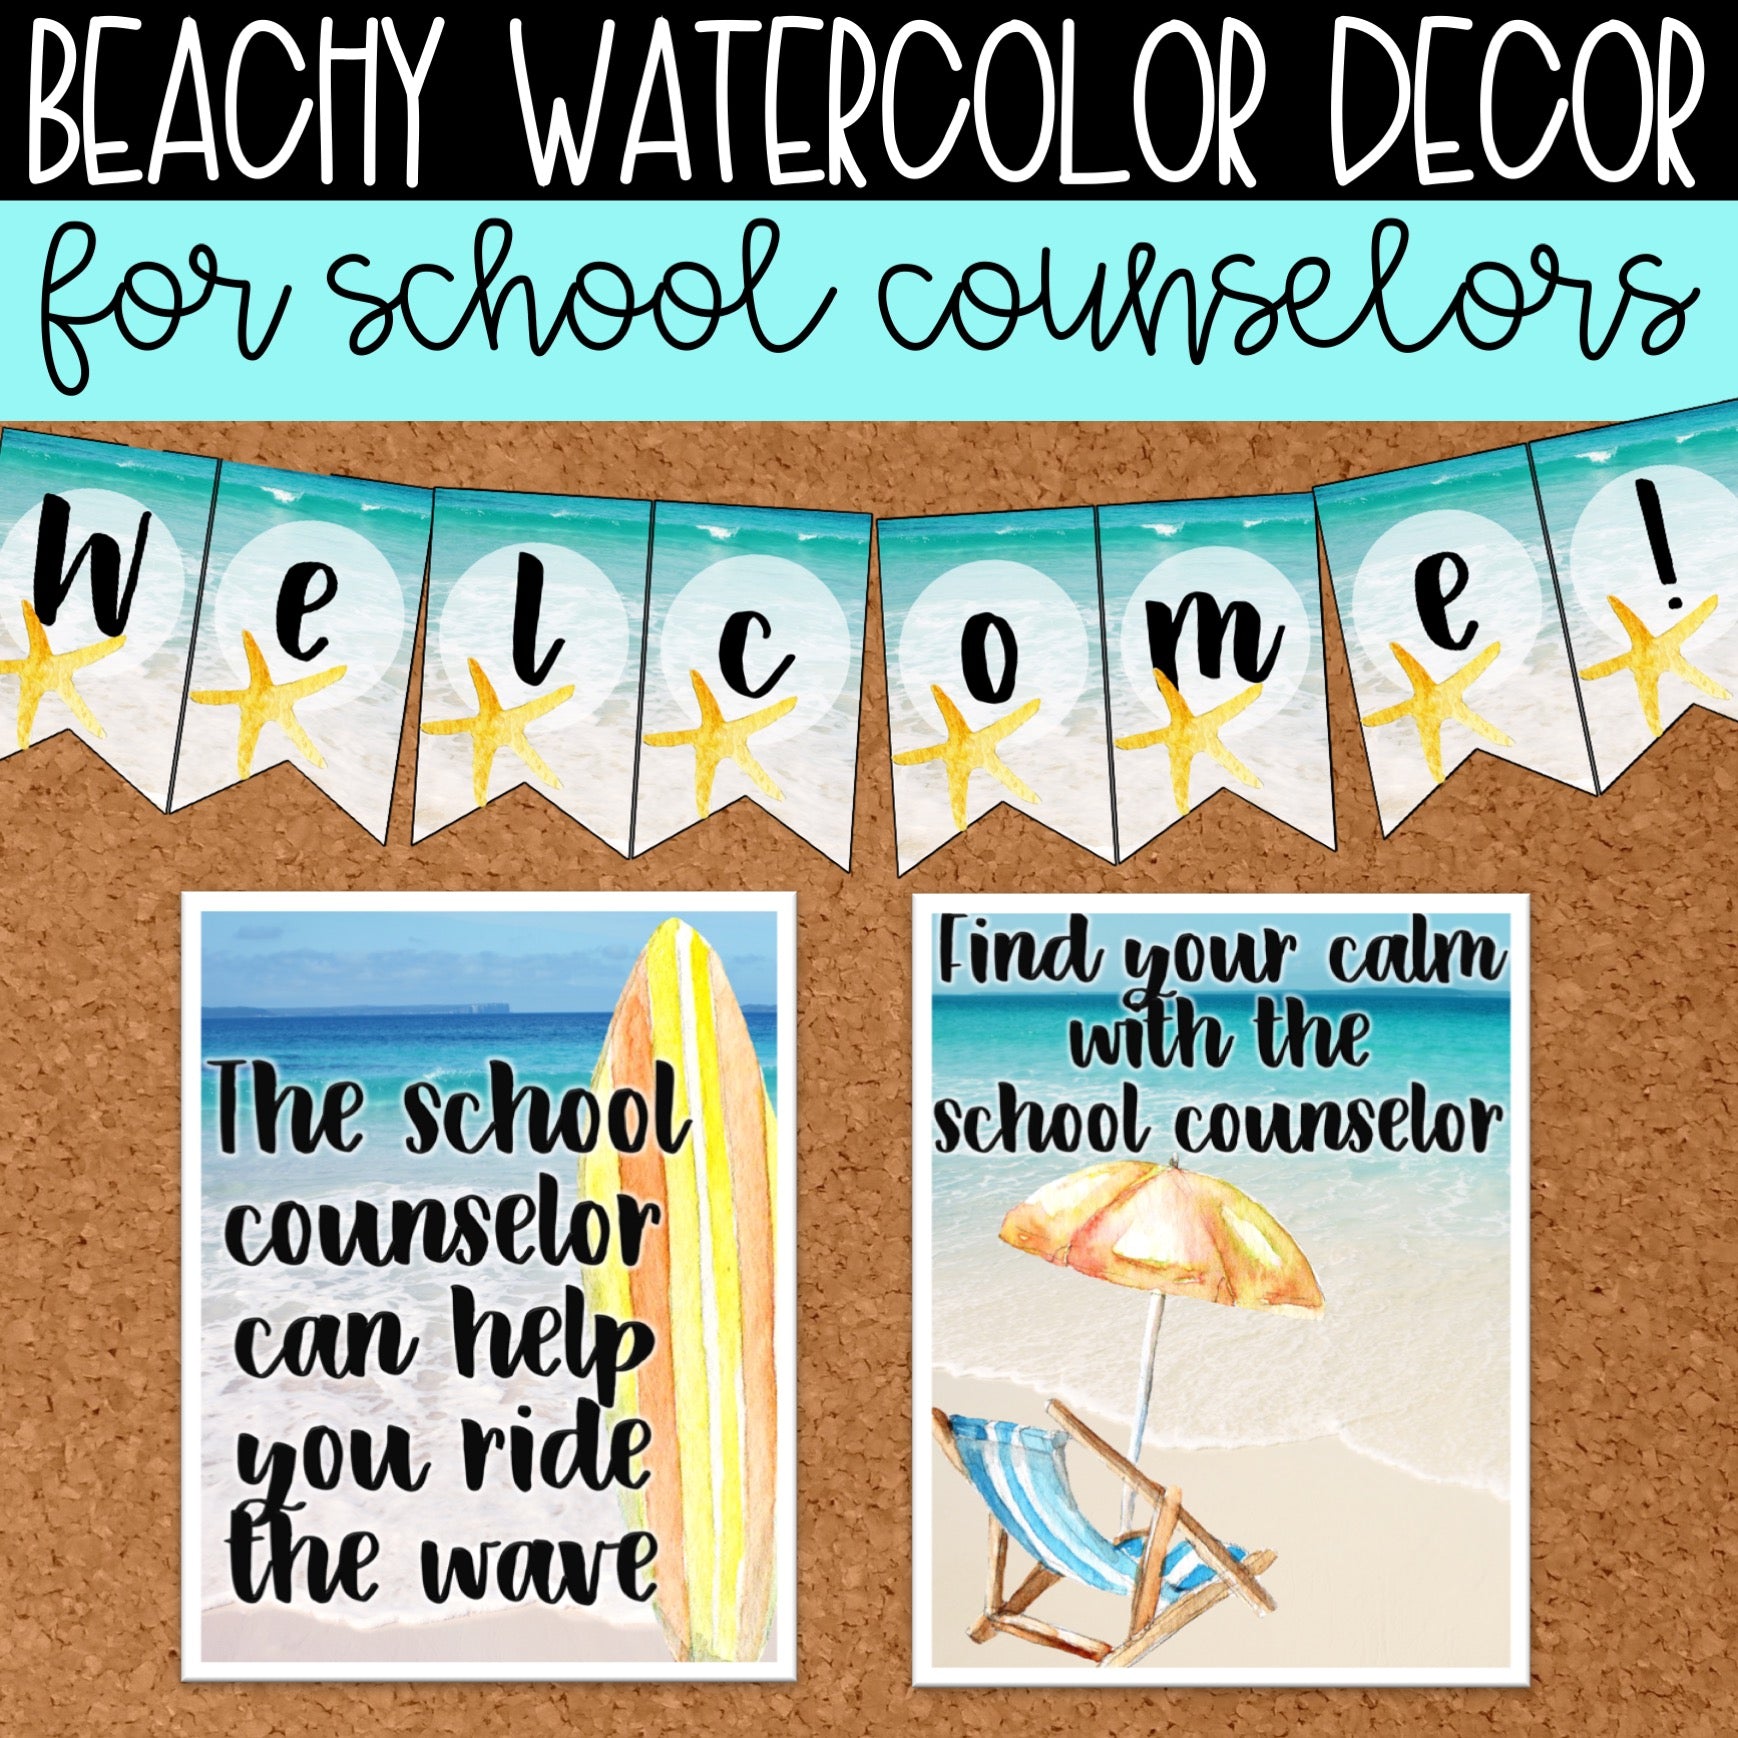 Watercolor Beach Decor Mini Set For School Counseling Office Ocean